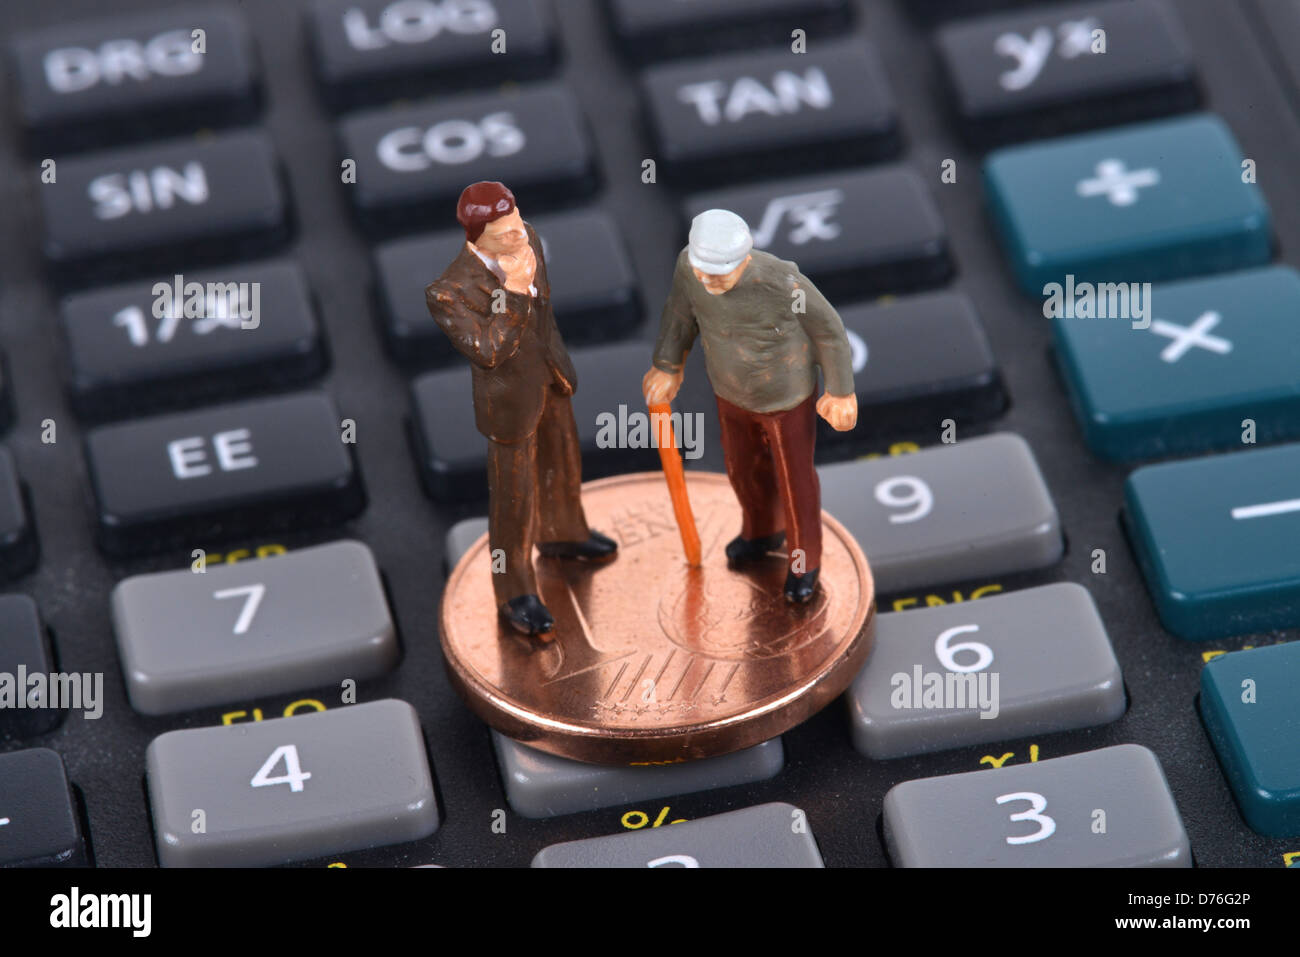 Symboldbild pensioner Miniaturfigur money pocket calculator Stock Photo